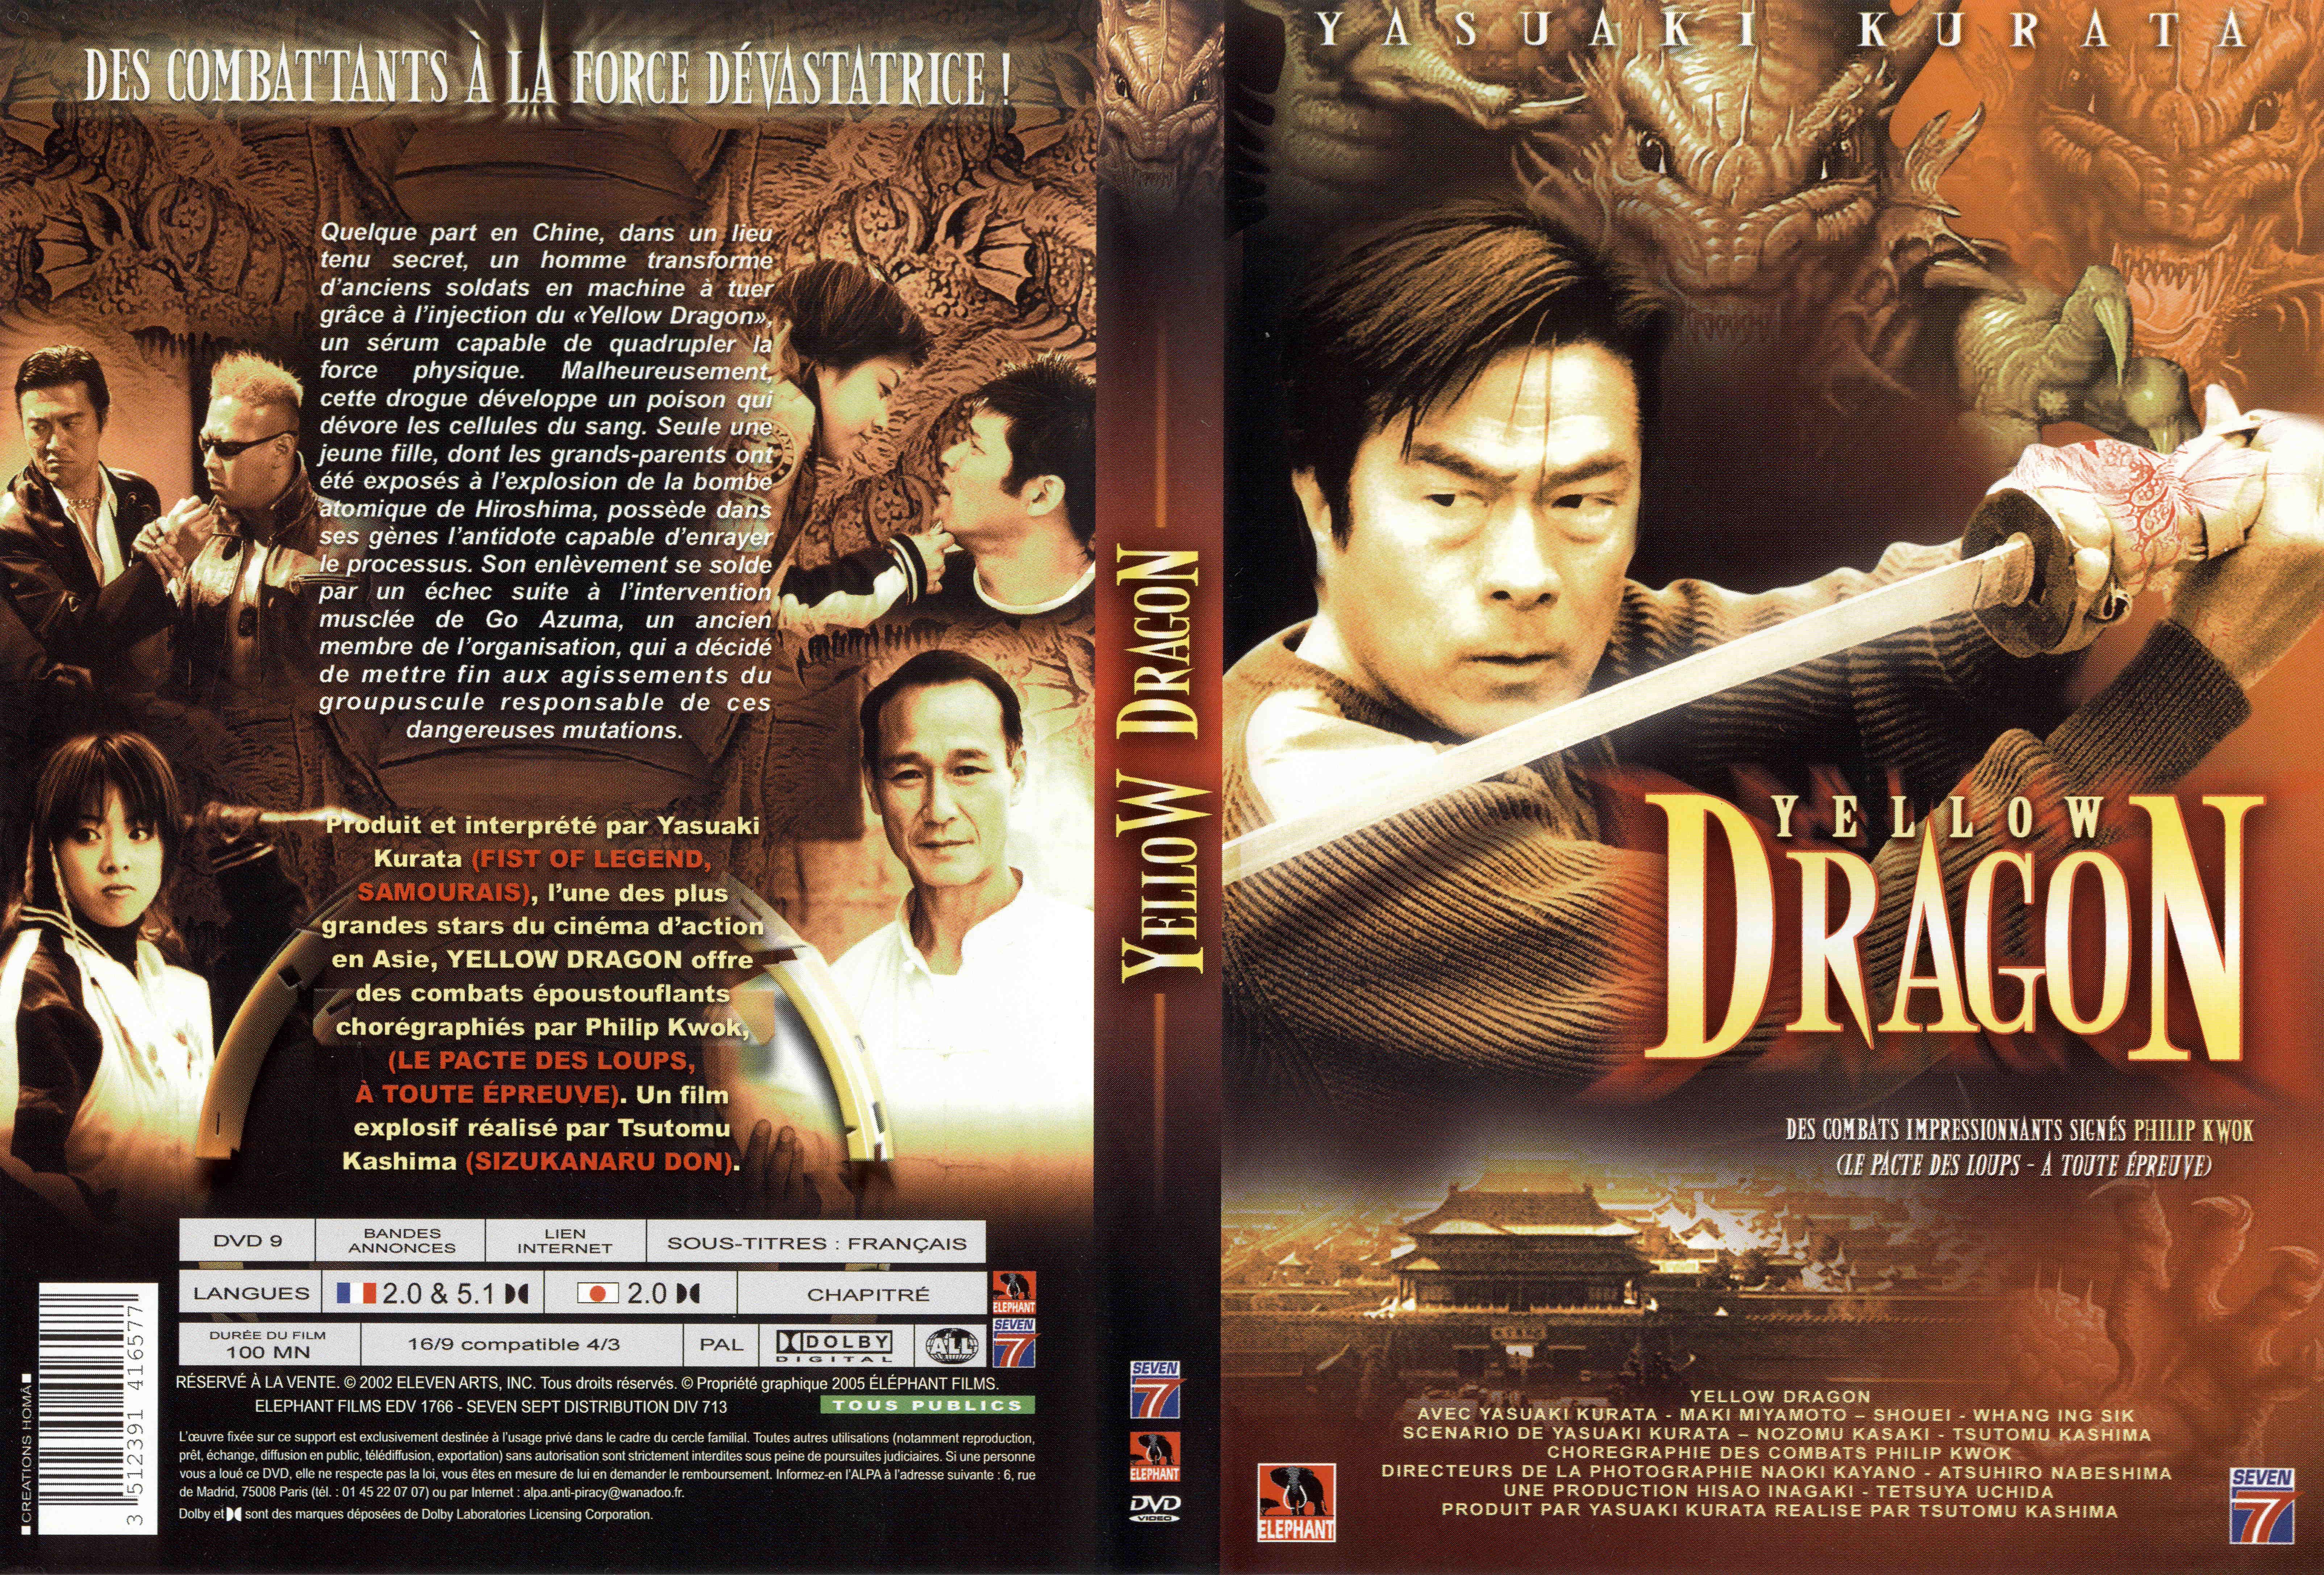 Jaquette DVD Yellow dragon v2